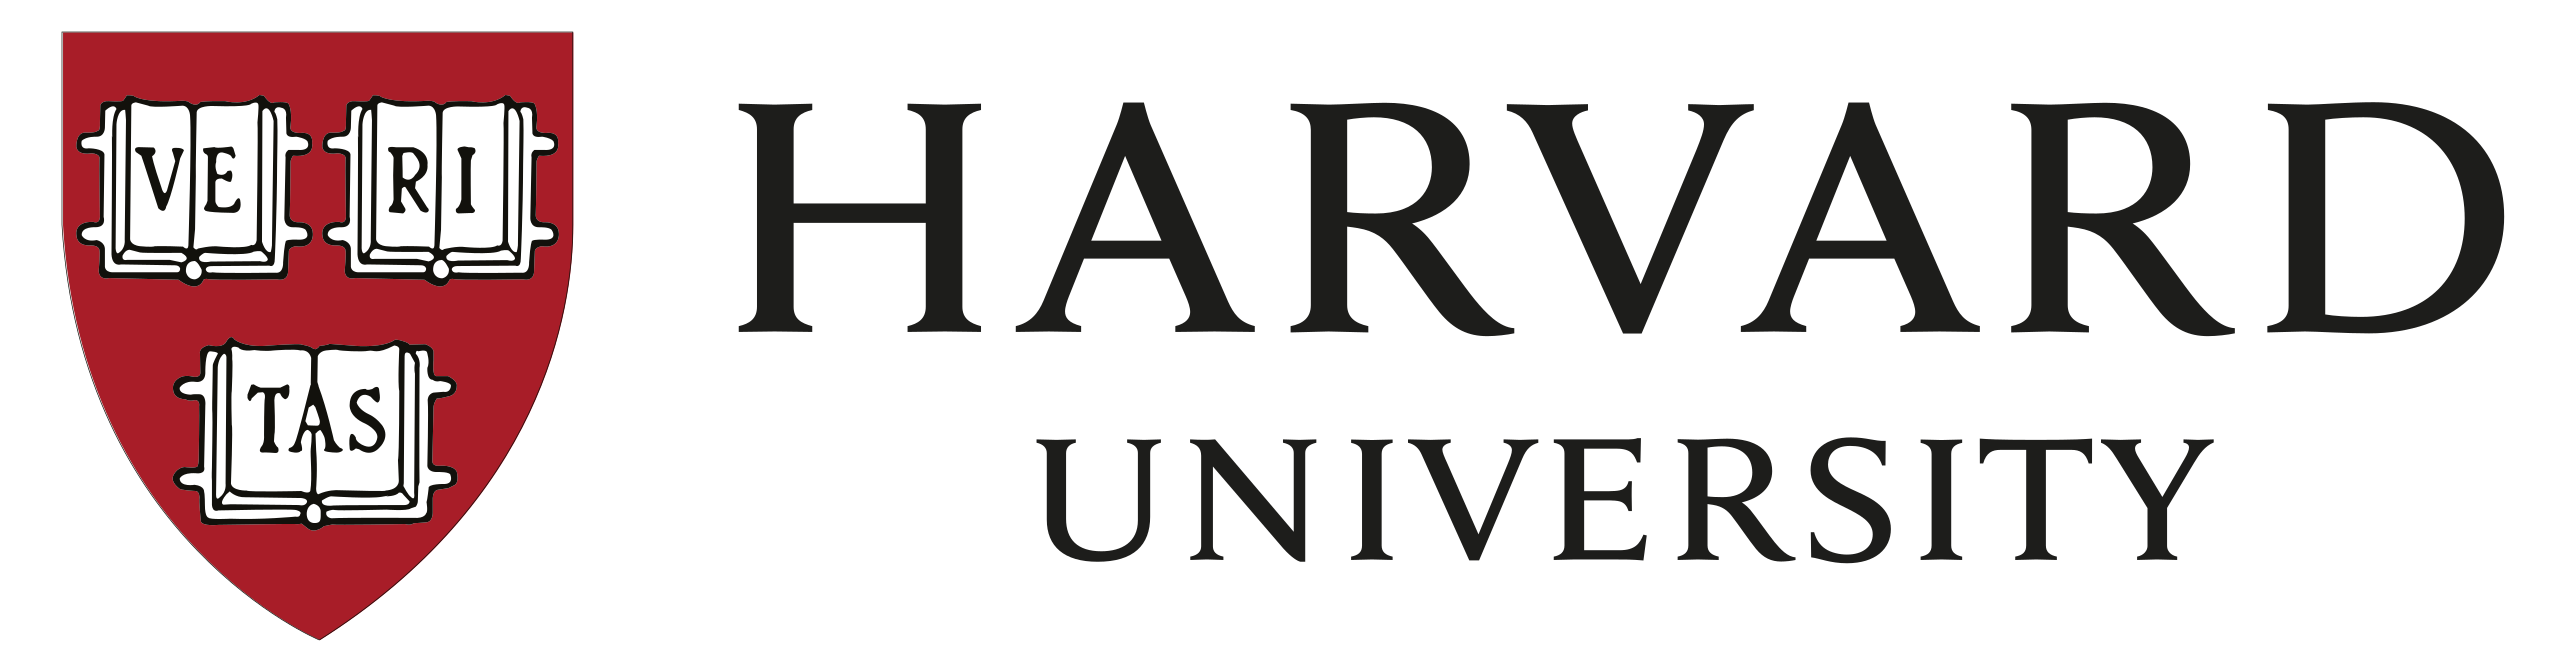 2560px-Harvard_University_logo.svg